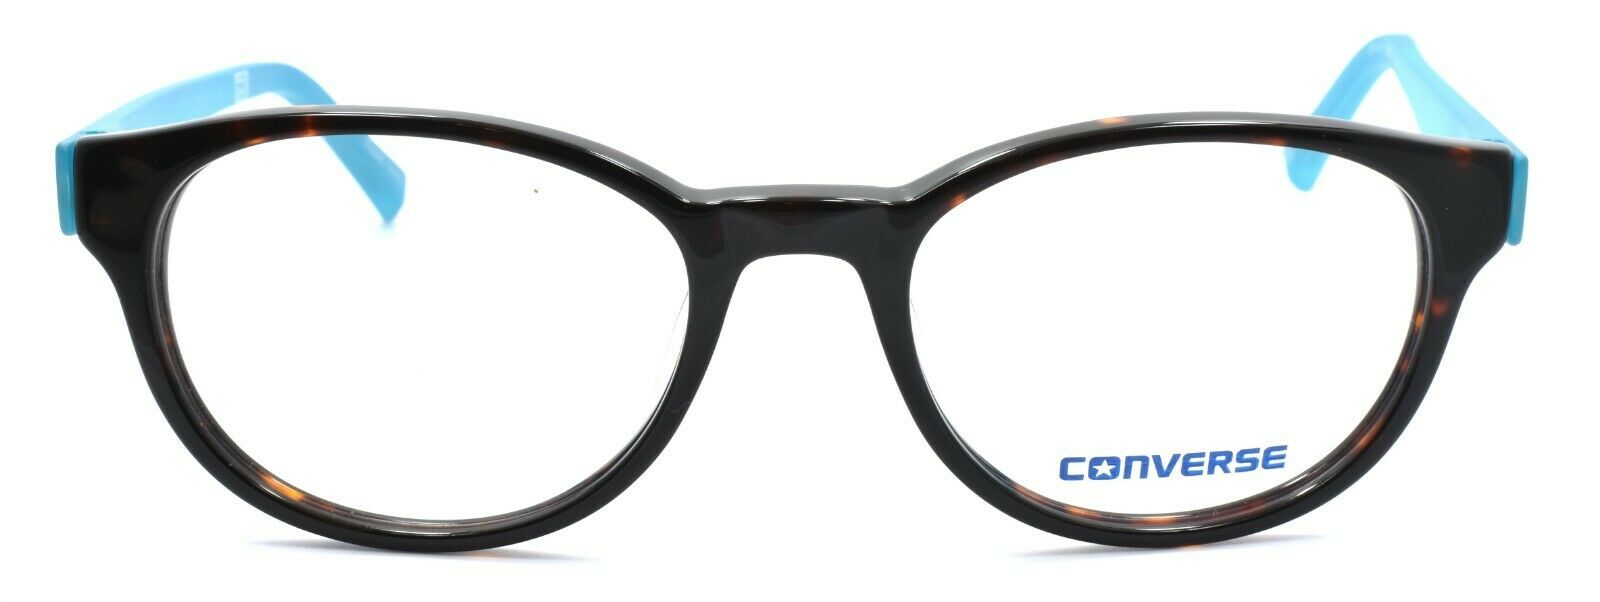 2-CONVERSE Q014 UF Unisex Eyeglasses Frames 48-18-140 Tortoise / Blue + CASE-751286256796-IKSpecs